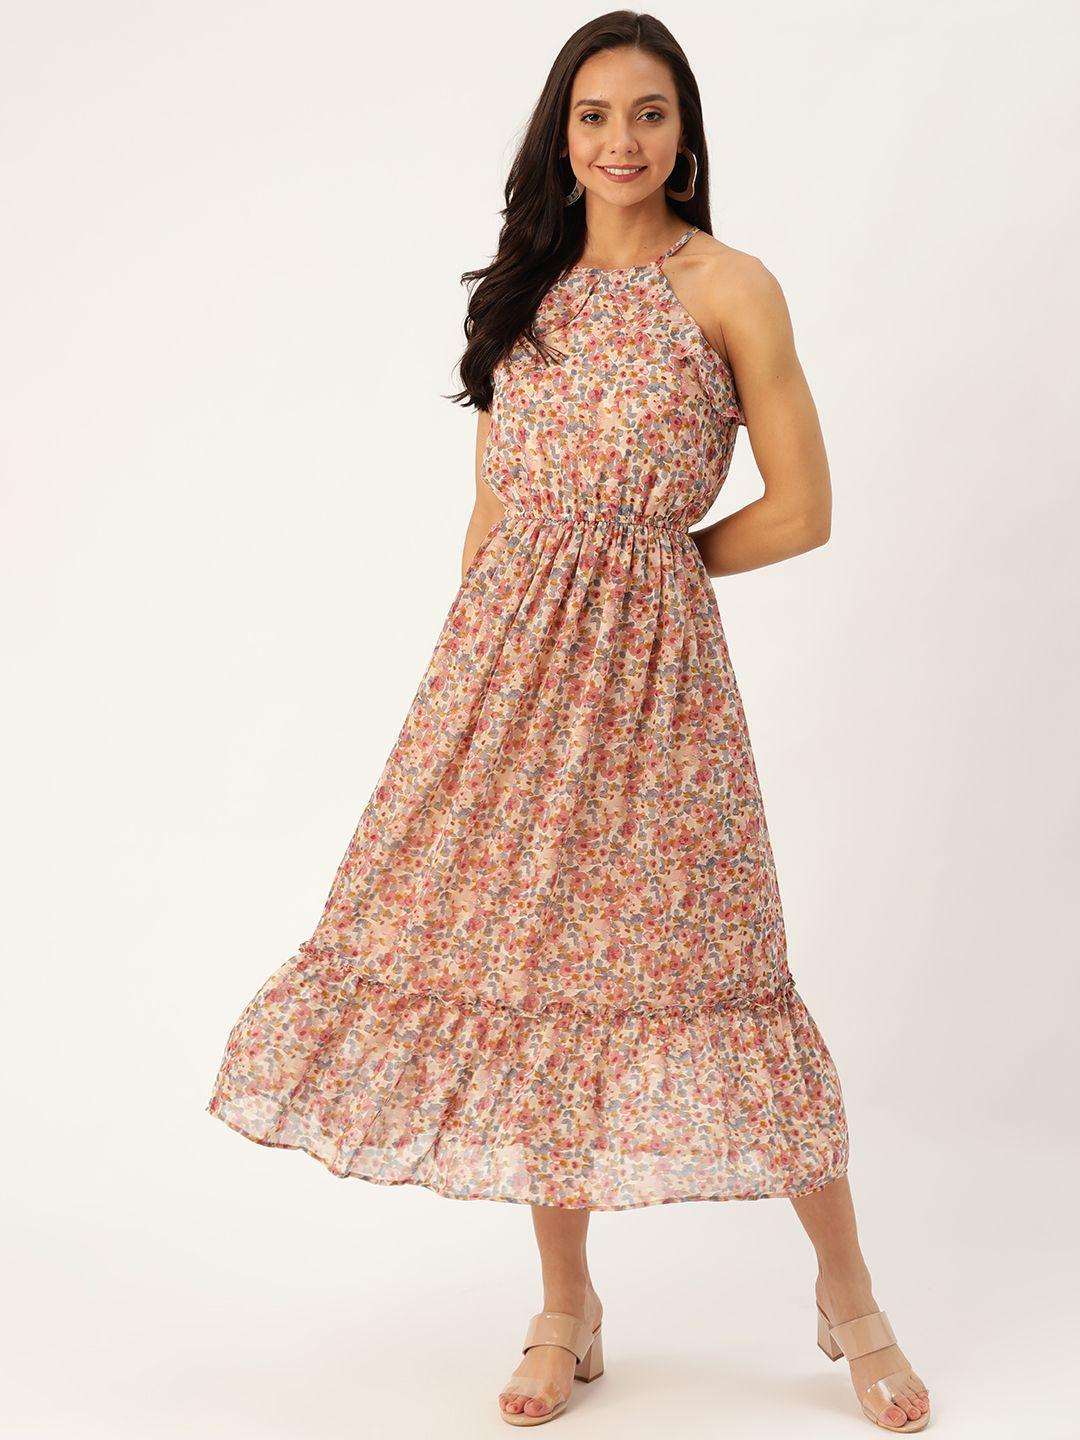 20dresses women dusty pink & blue floral printed a-line dress